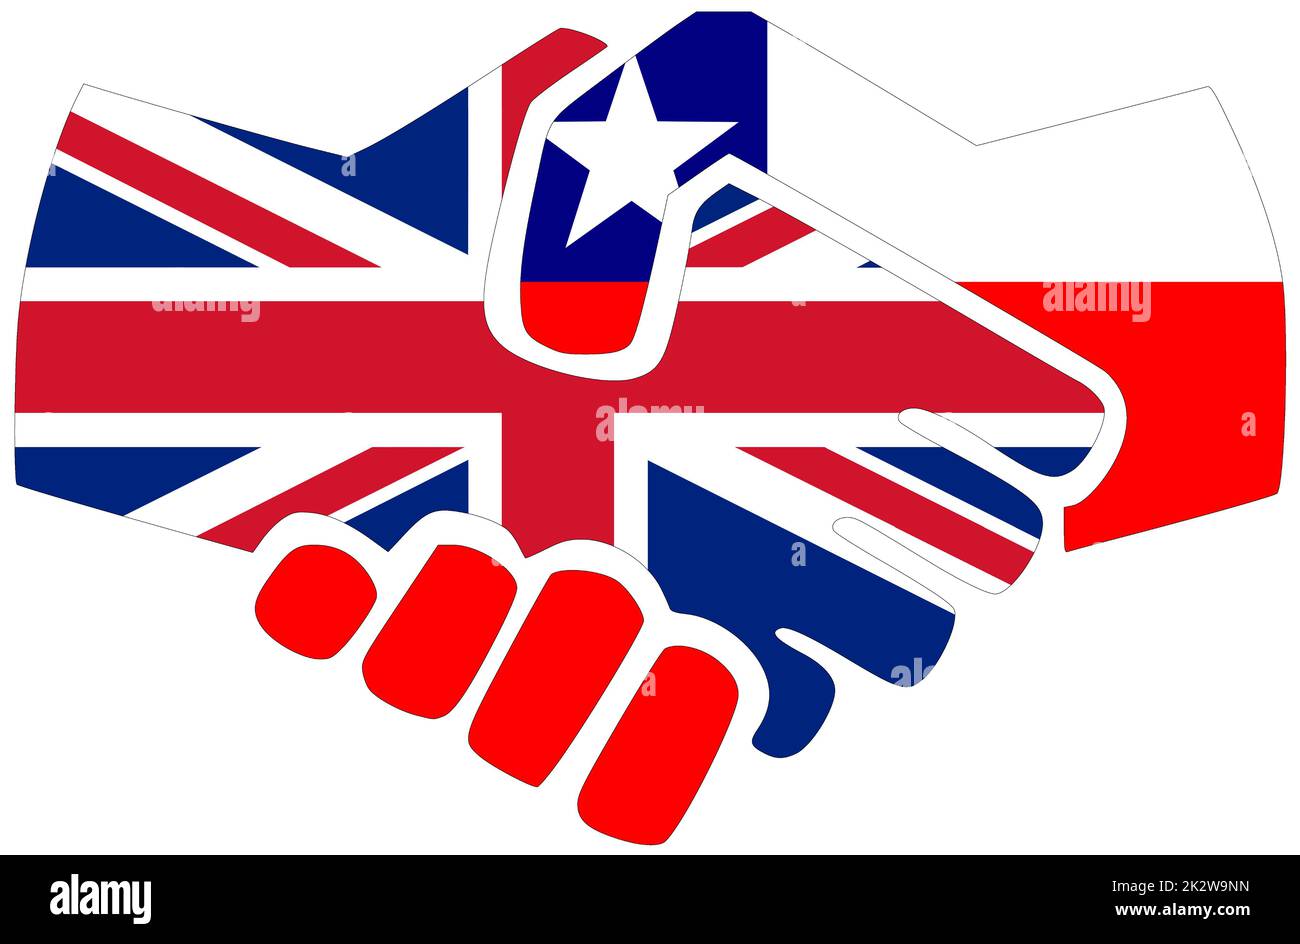 UK - Chile : Handshake, symbol of agreement or friendship Stock Photo